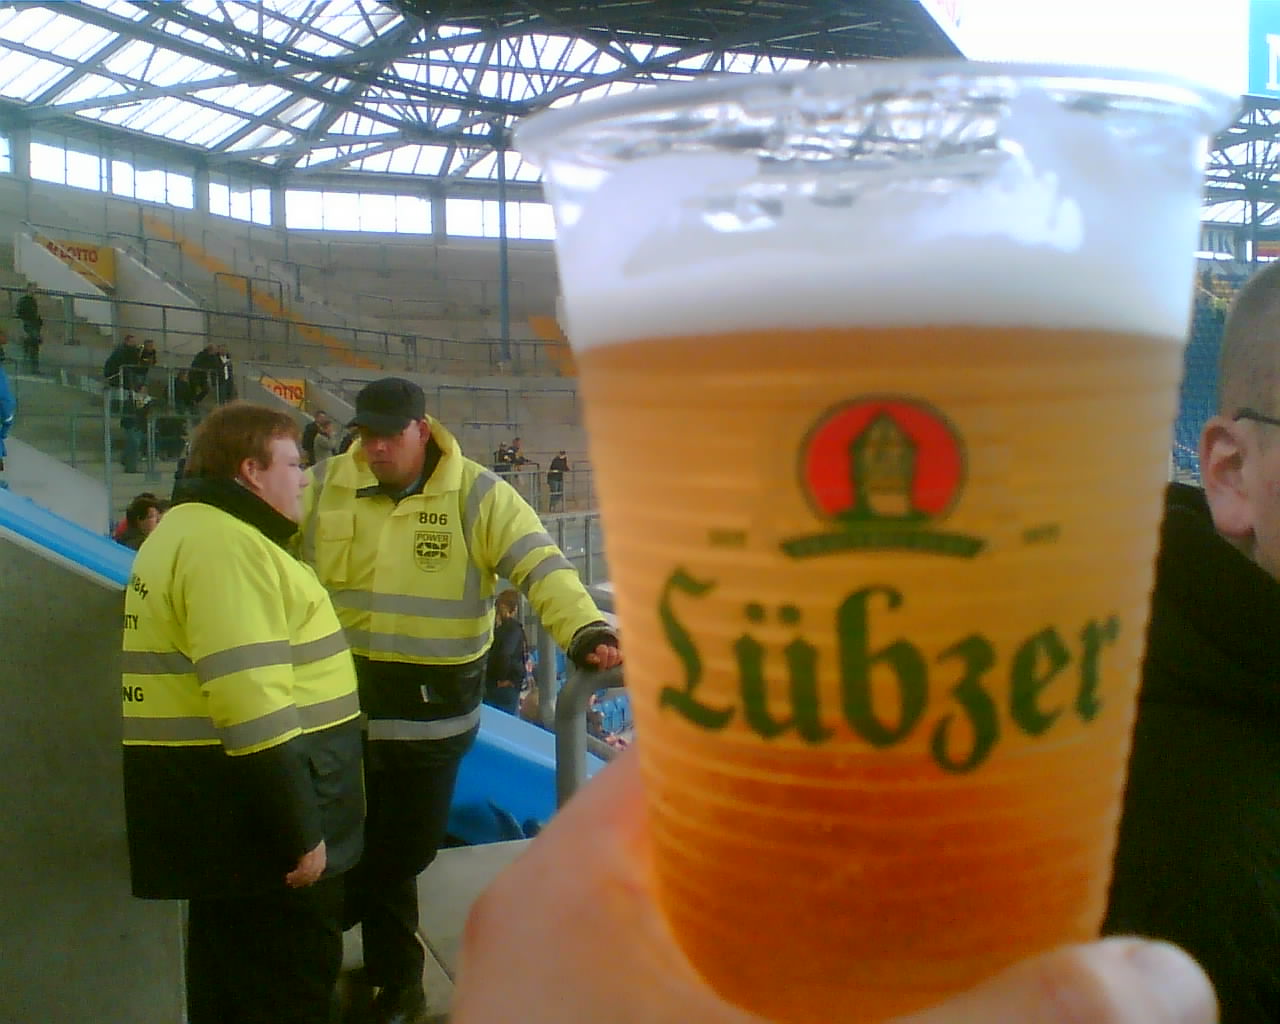 Bierbecher, Lübzer, Stadion Rostock